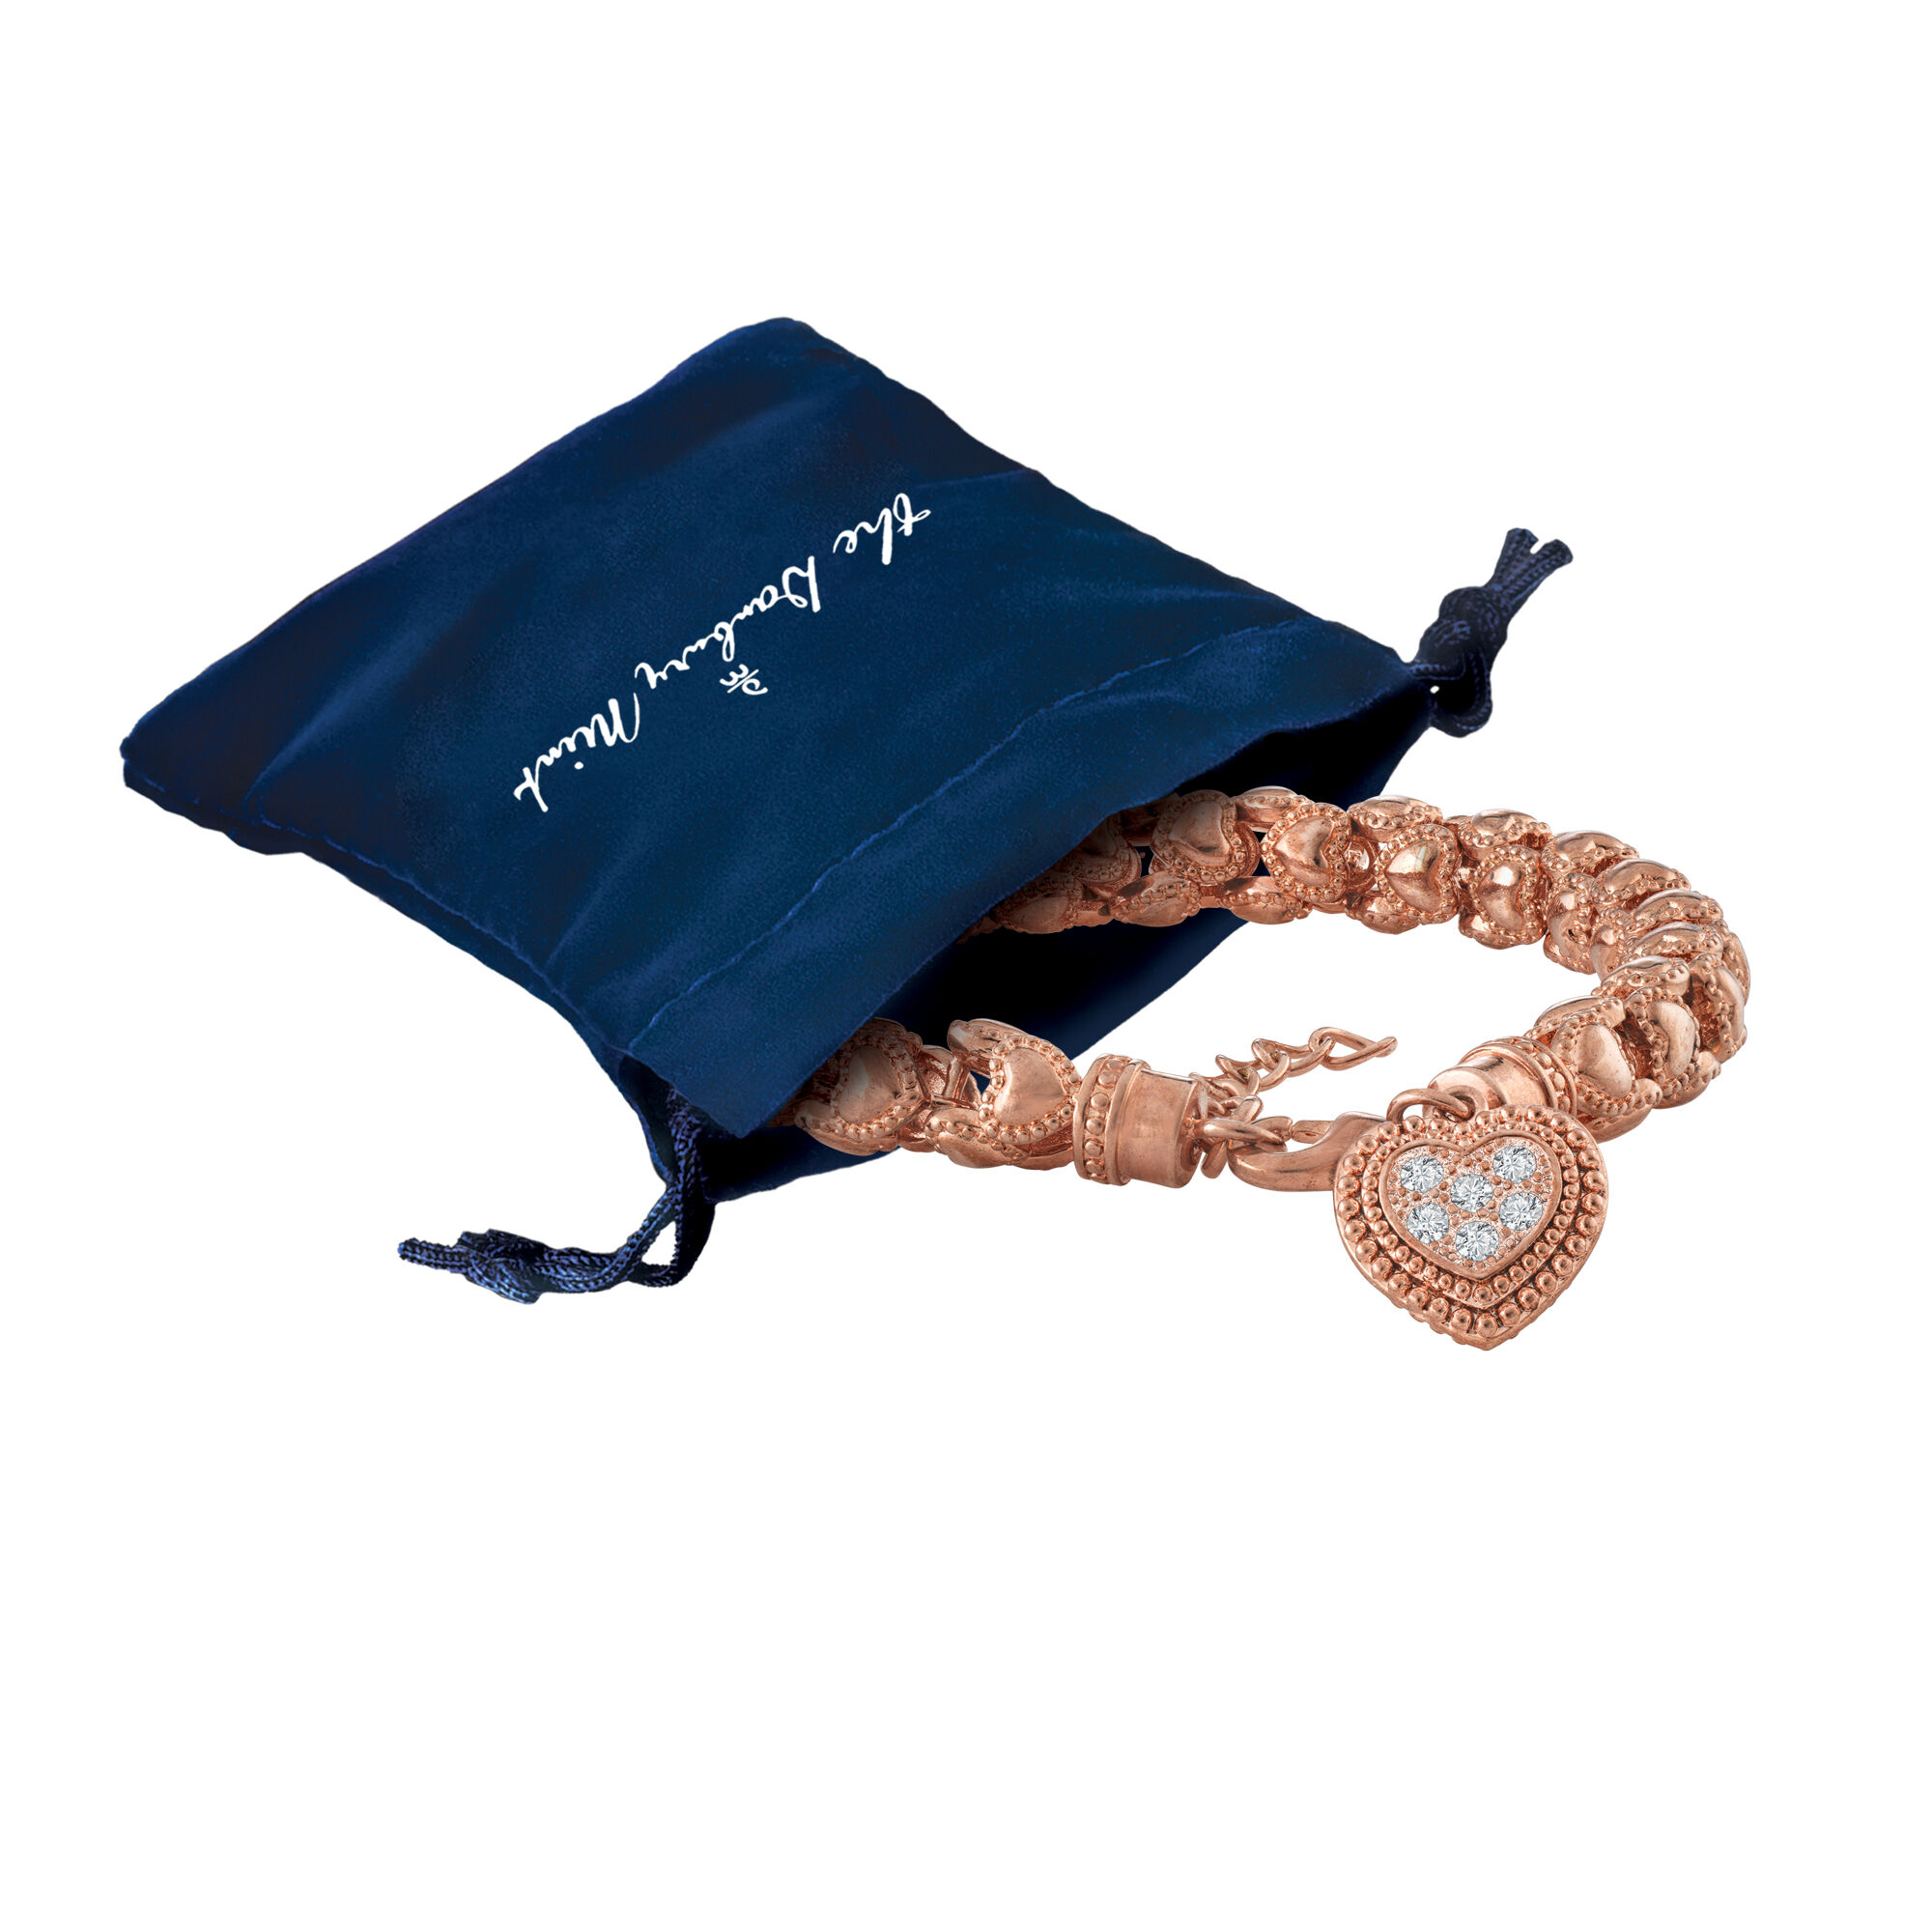 The Sweetheart Copper Bracelet 10326 0014 g gift pouch